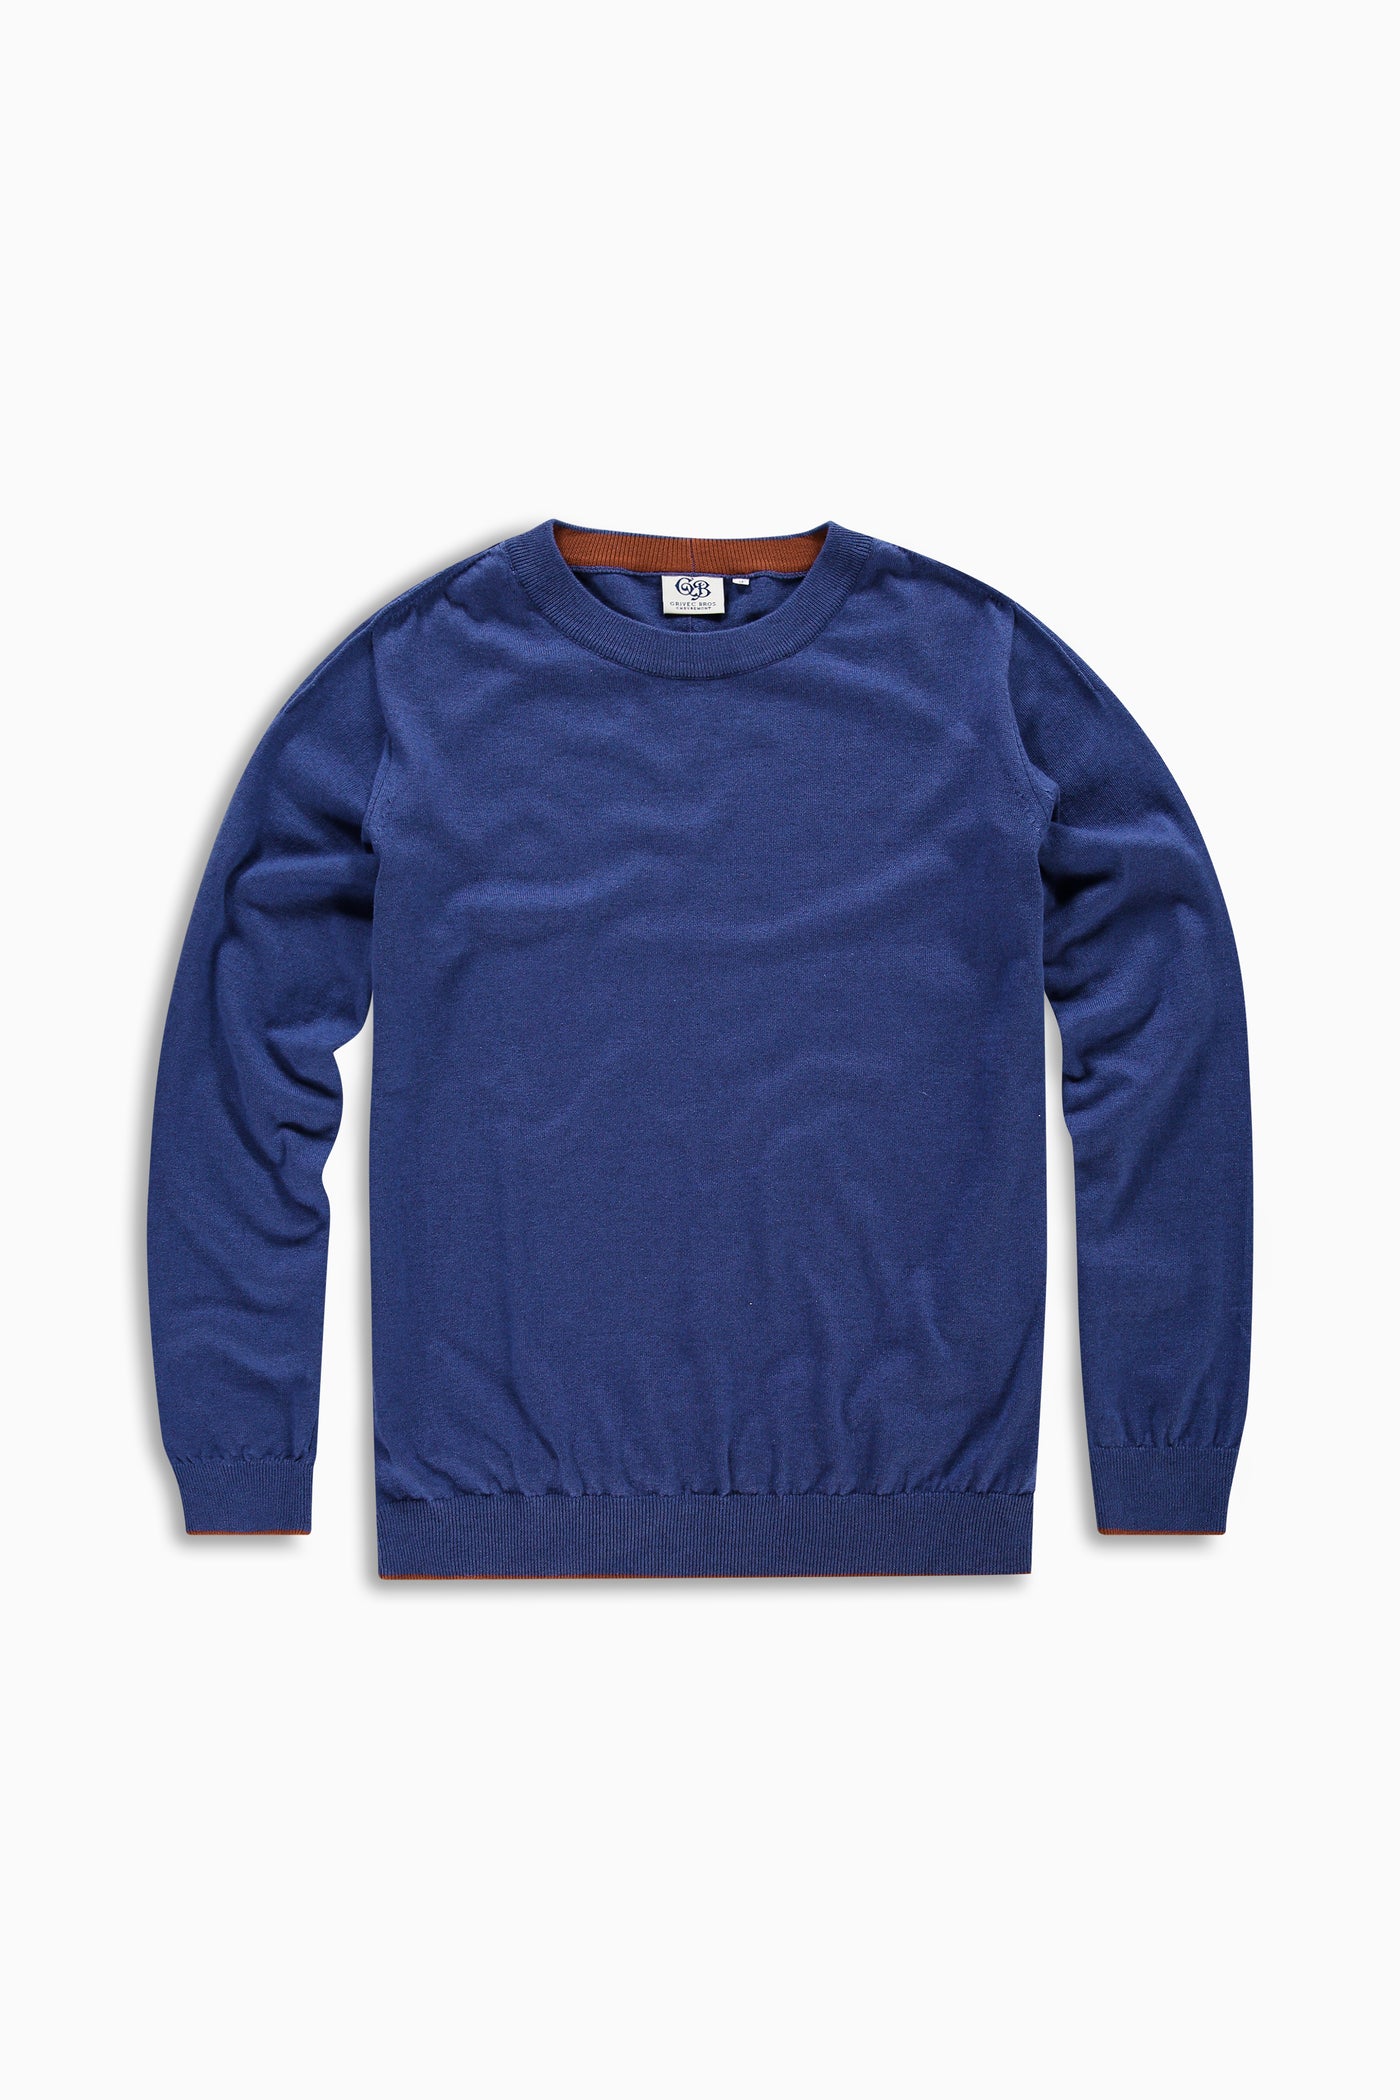 Curved Knit Blue Cotton/Cashmere